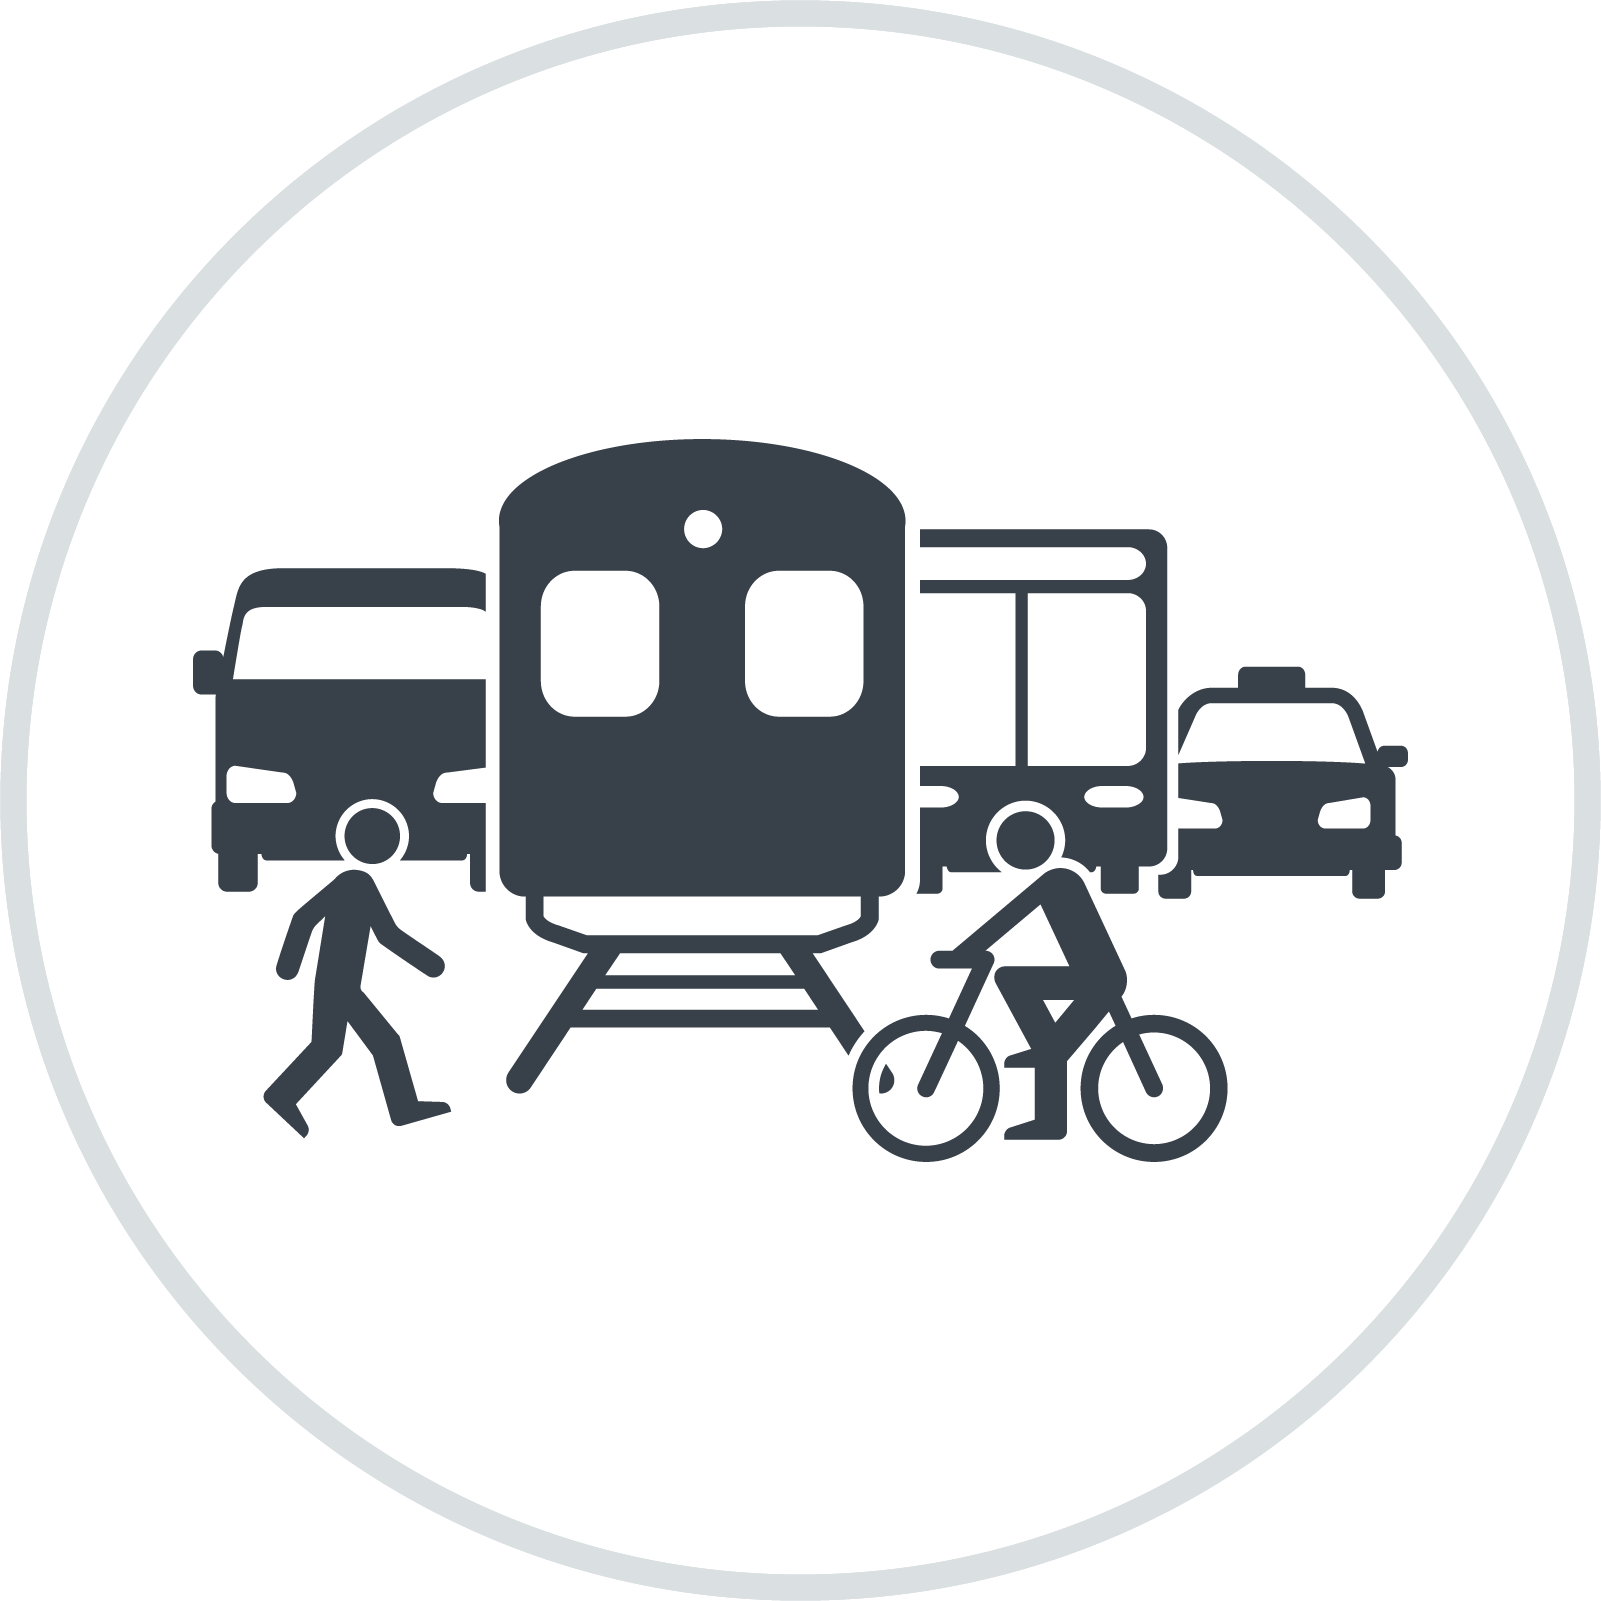 Various Modesof Transportation Icon PNG